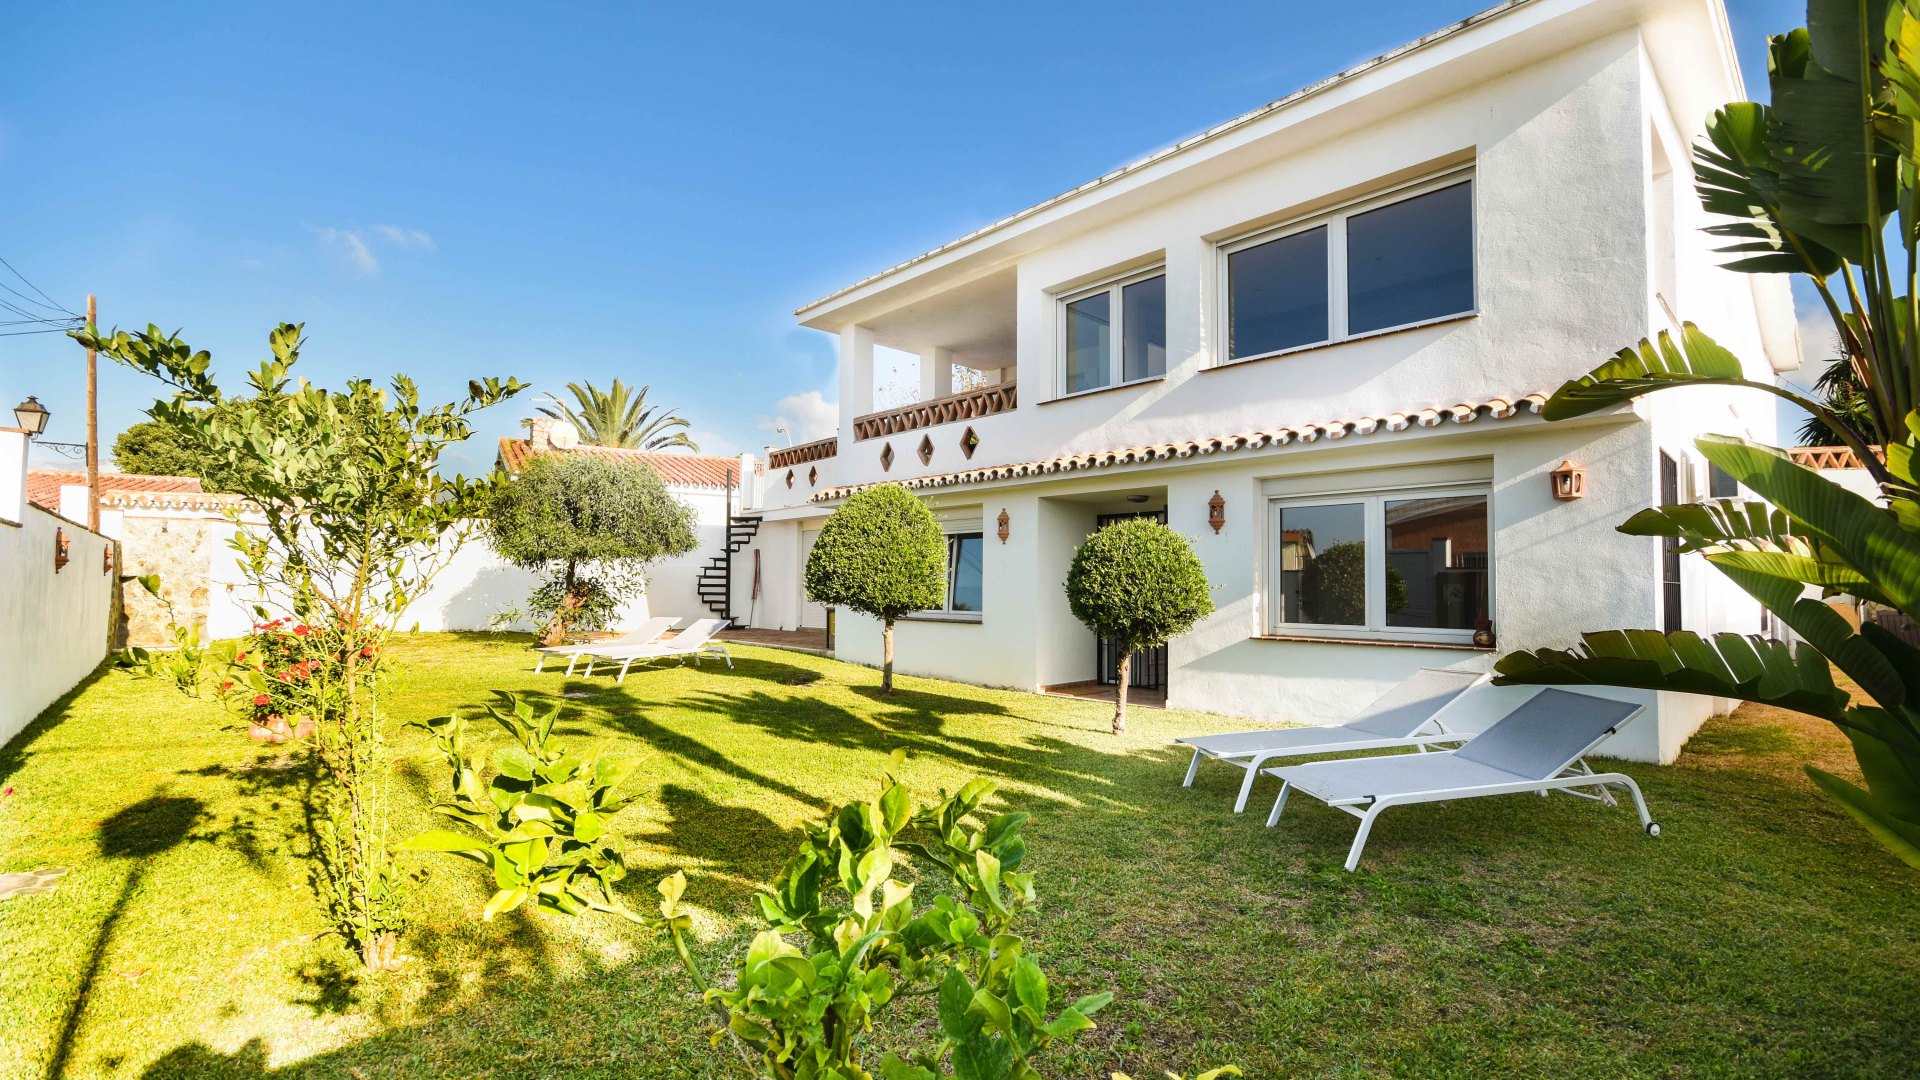 Detached 4 bedroom furnished house in Costabella, Marbella